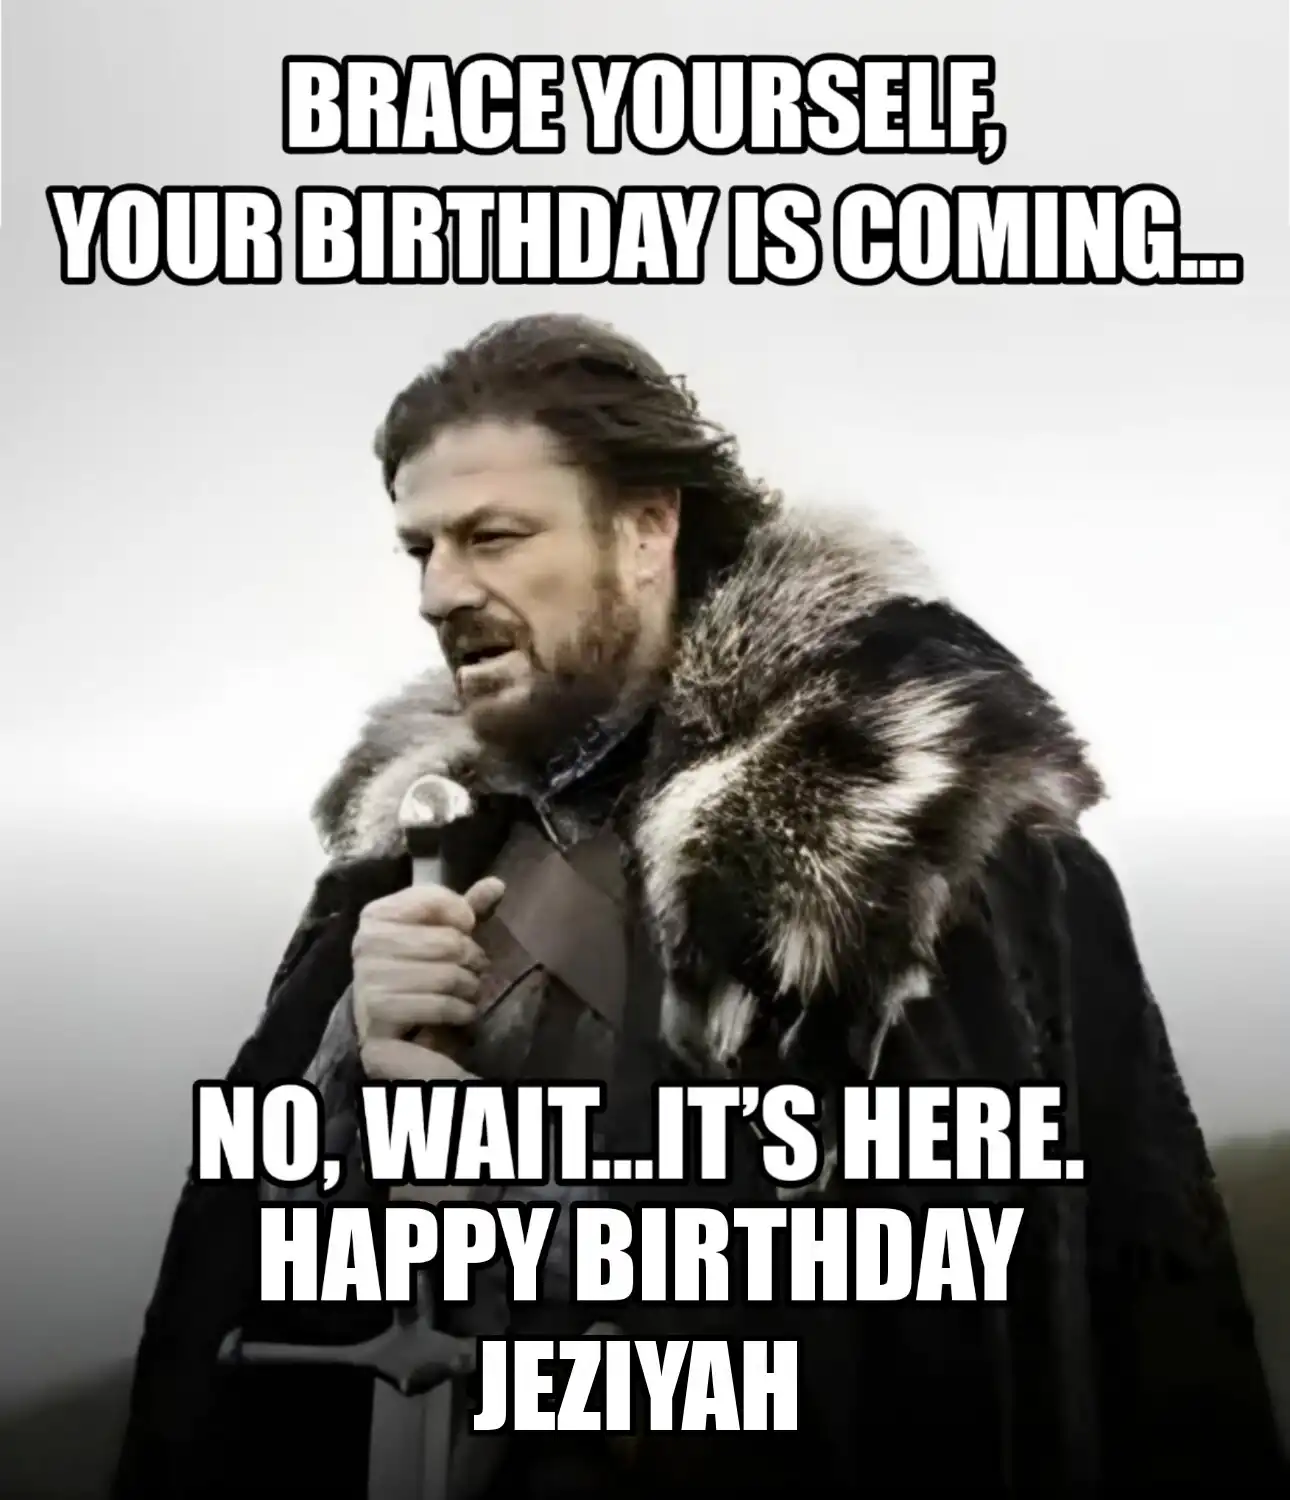 Happy Birthday Jeziyah Brace Yourself Your Birthday Is Coming Meme